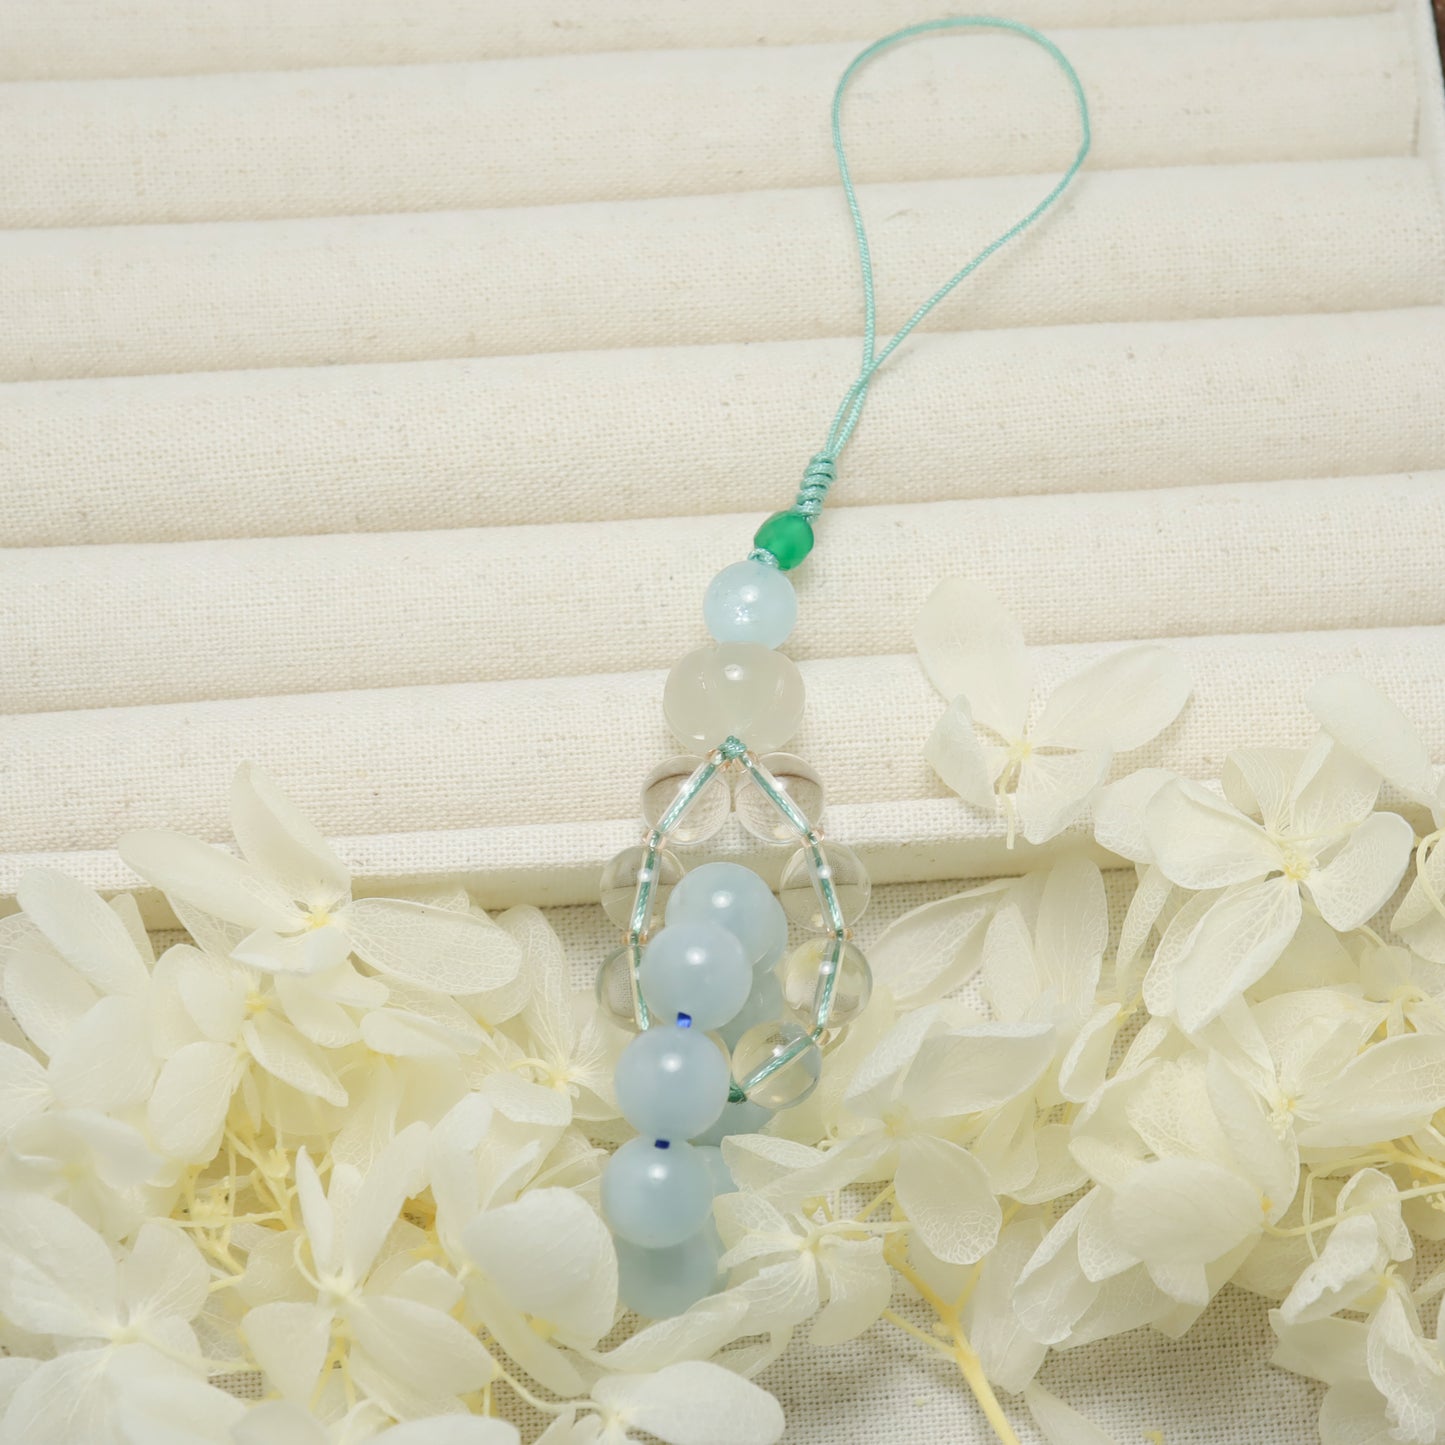 Little Cutie Pie - Aquamarine Clear Crystal Duomei Alashan Key Chain/Phone Charm